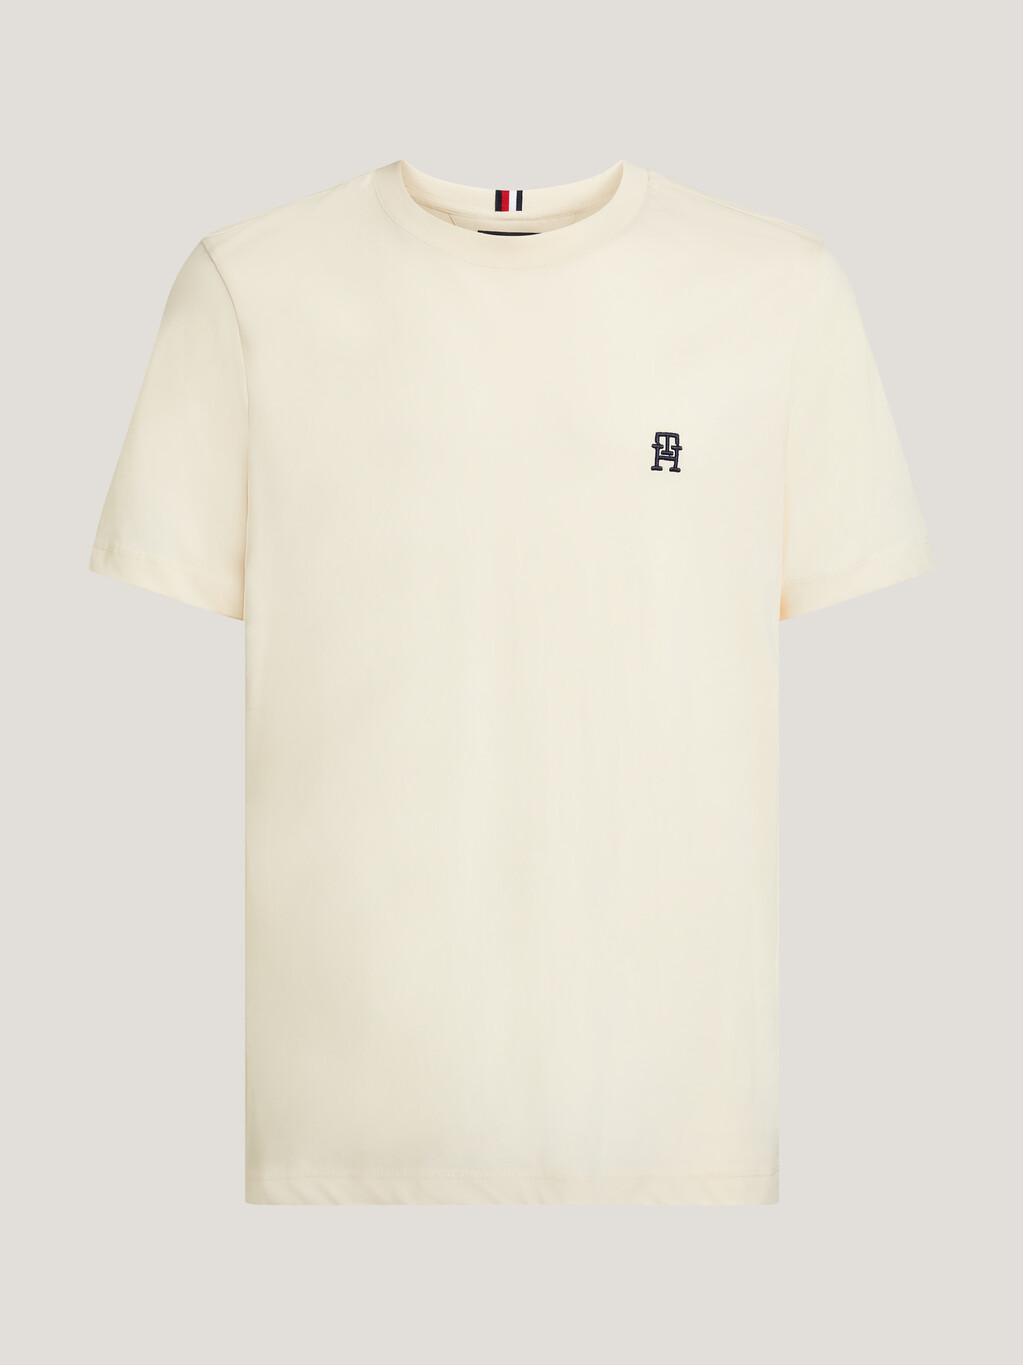 TH Monogram T-Shirt, Calico, hi-res